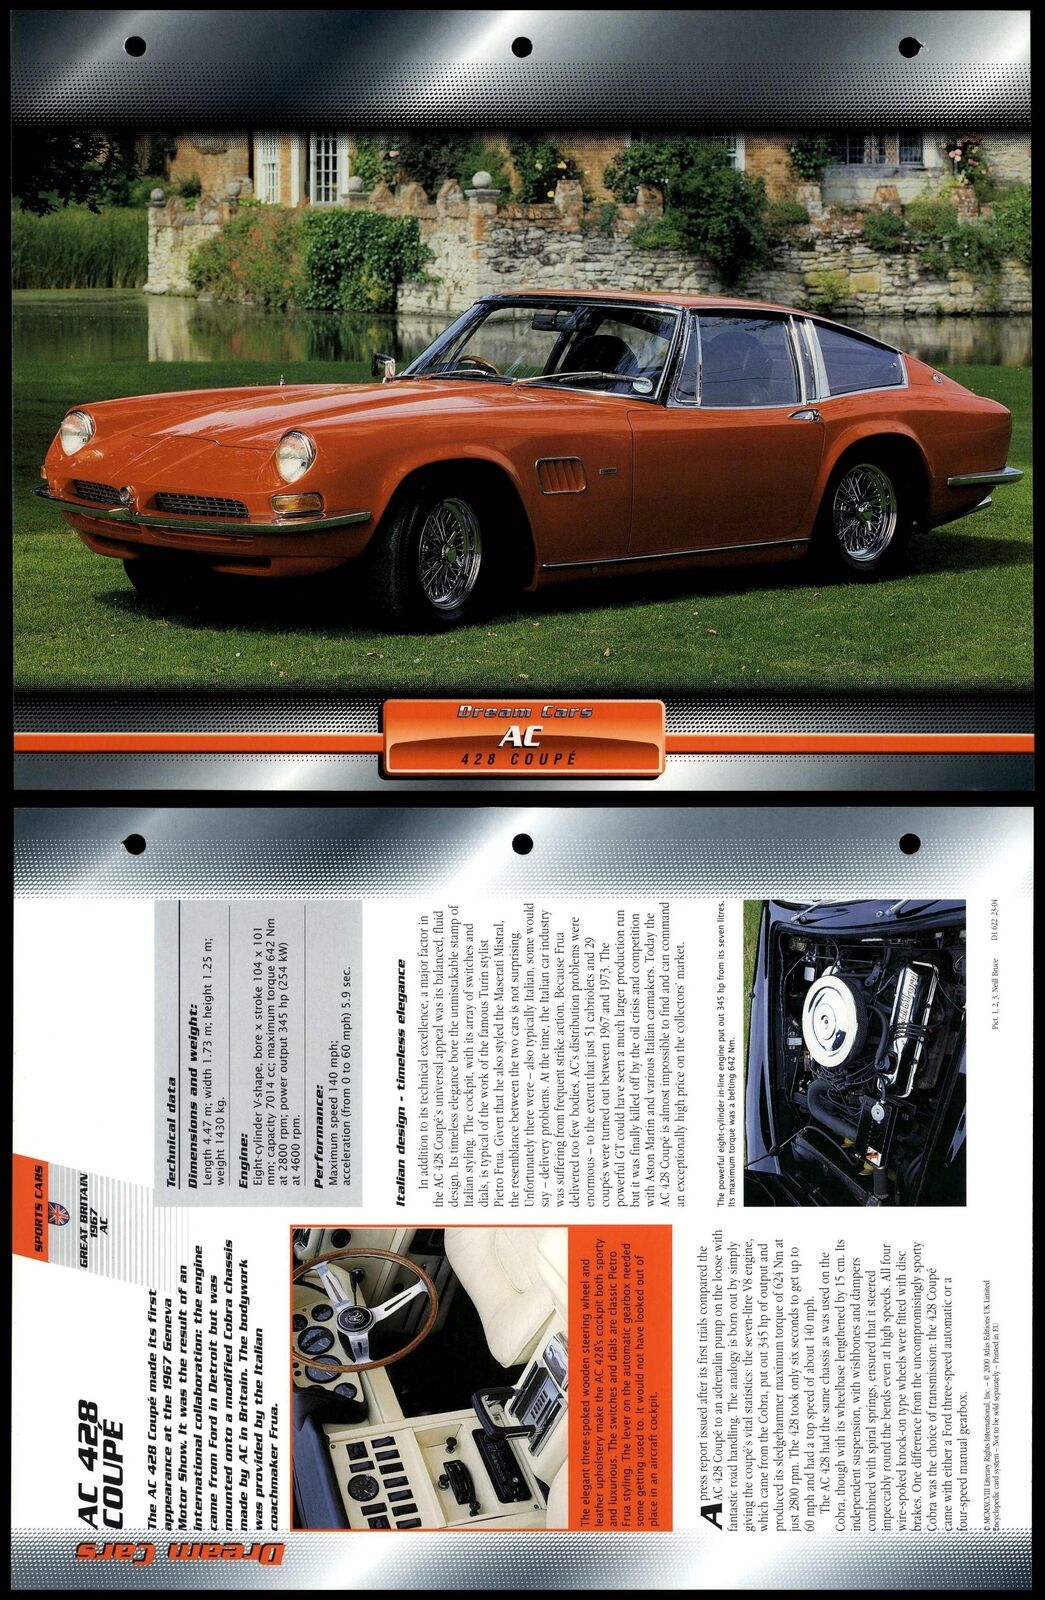 AC 428 Coupe - 1967 - Sports - Atlas Dream Cars Fact File Card